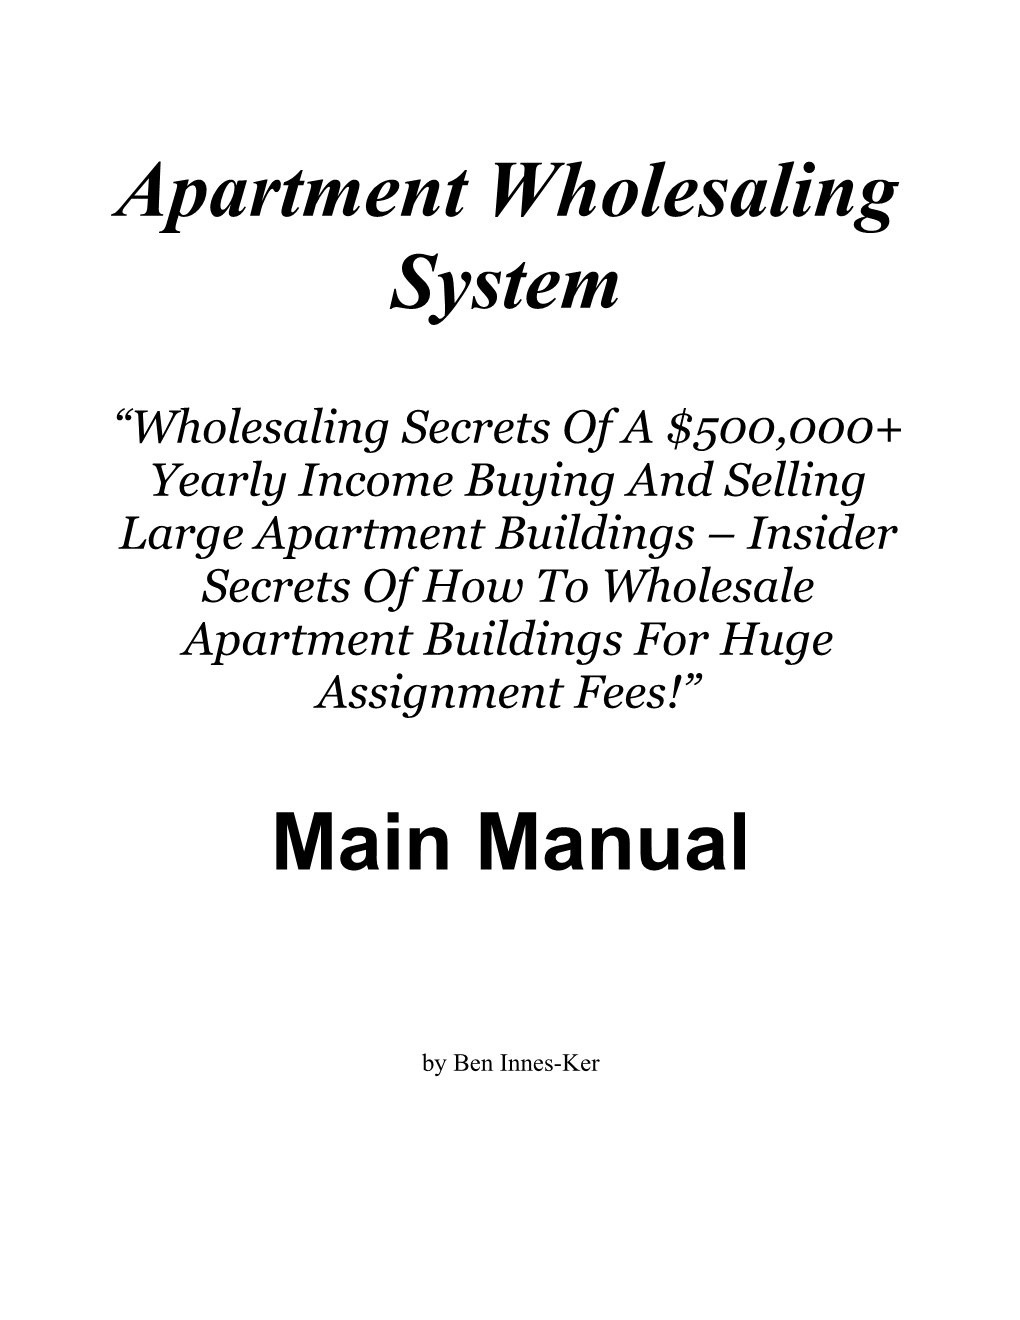 Apartment Wholesaling System Main Manual